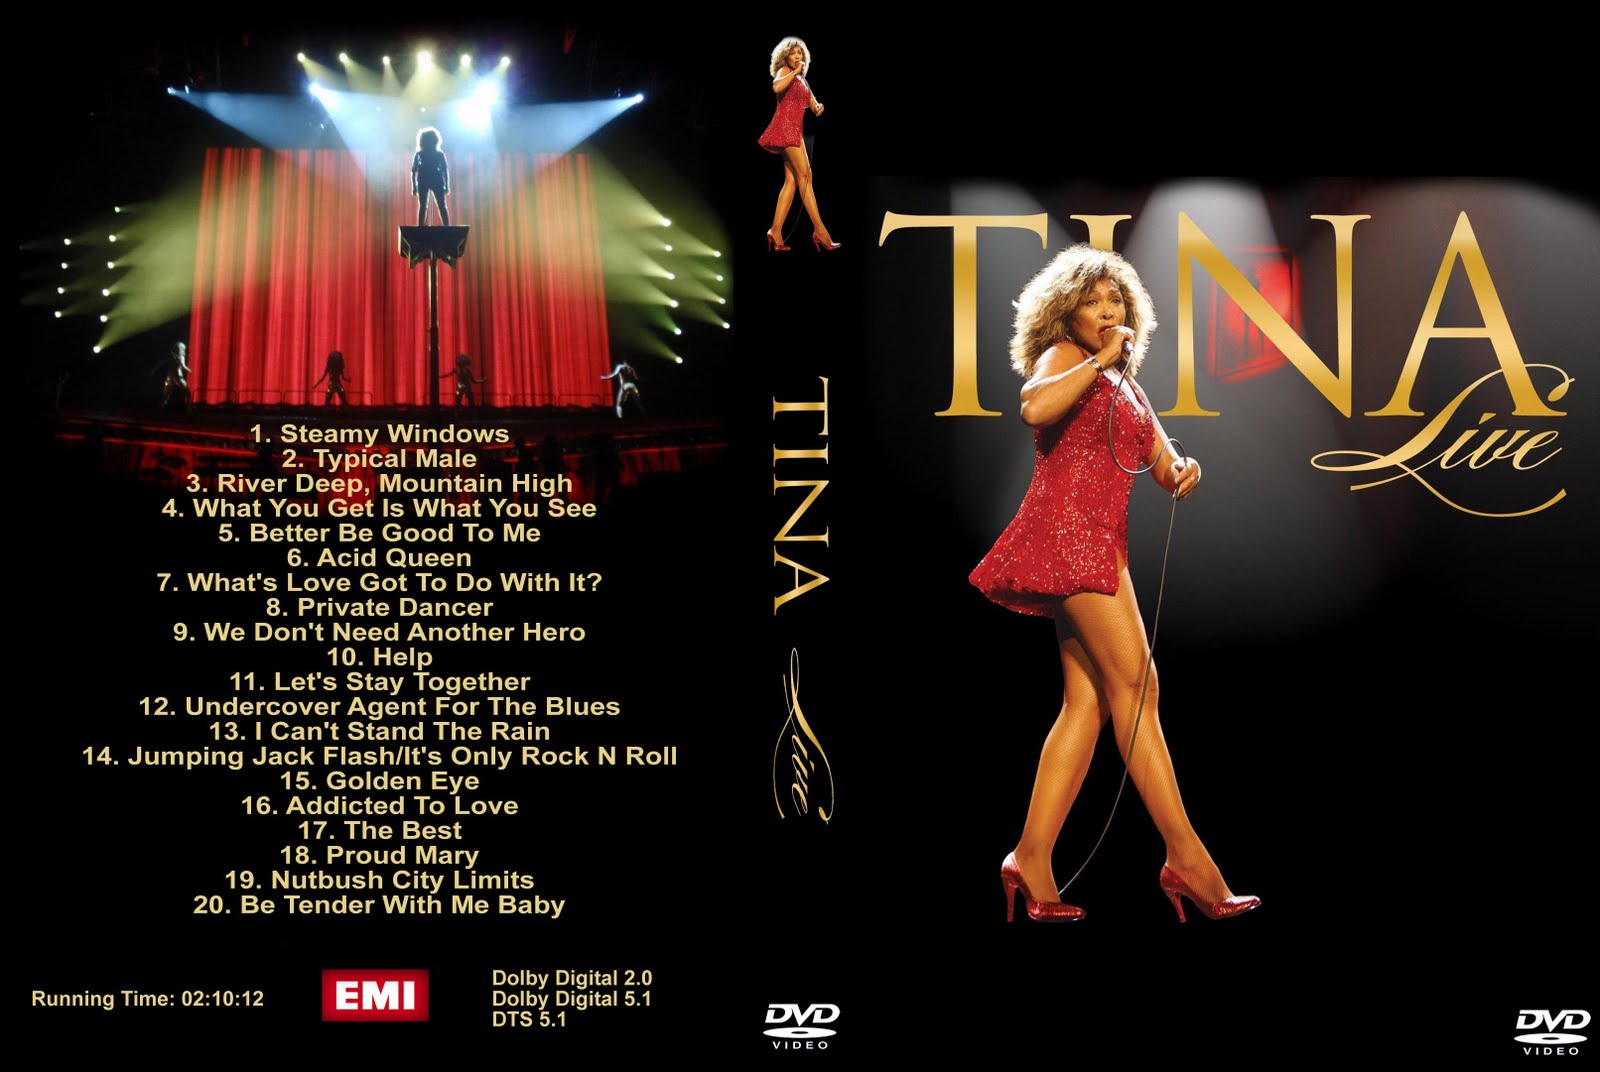 http://2.bp.blogspot.com/_mGkxudAo5eA/TCrB7jOPZaI/AAAAAAAABgU/NpTNO8otiMY/s1600/Tina+Turner+-+Live+-+Cover.jpg